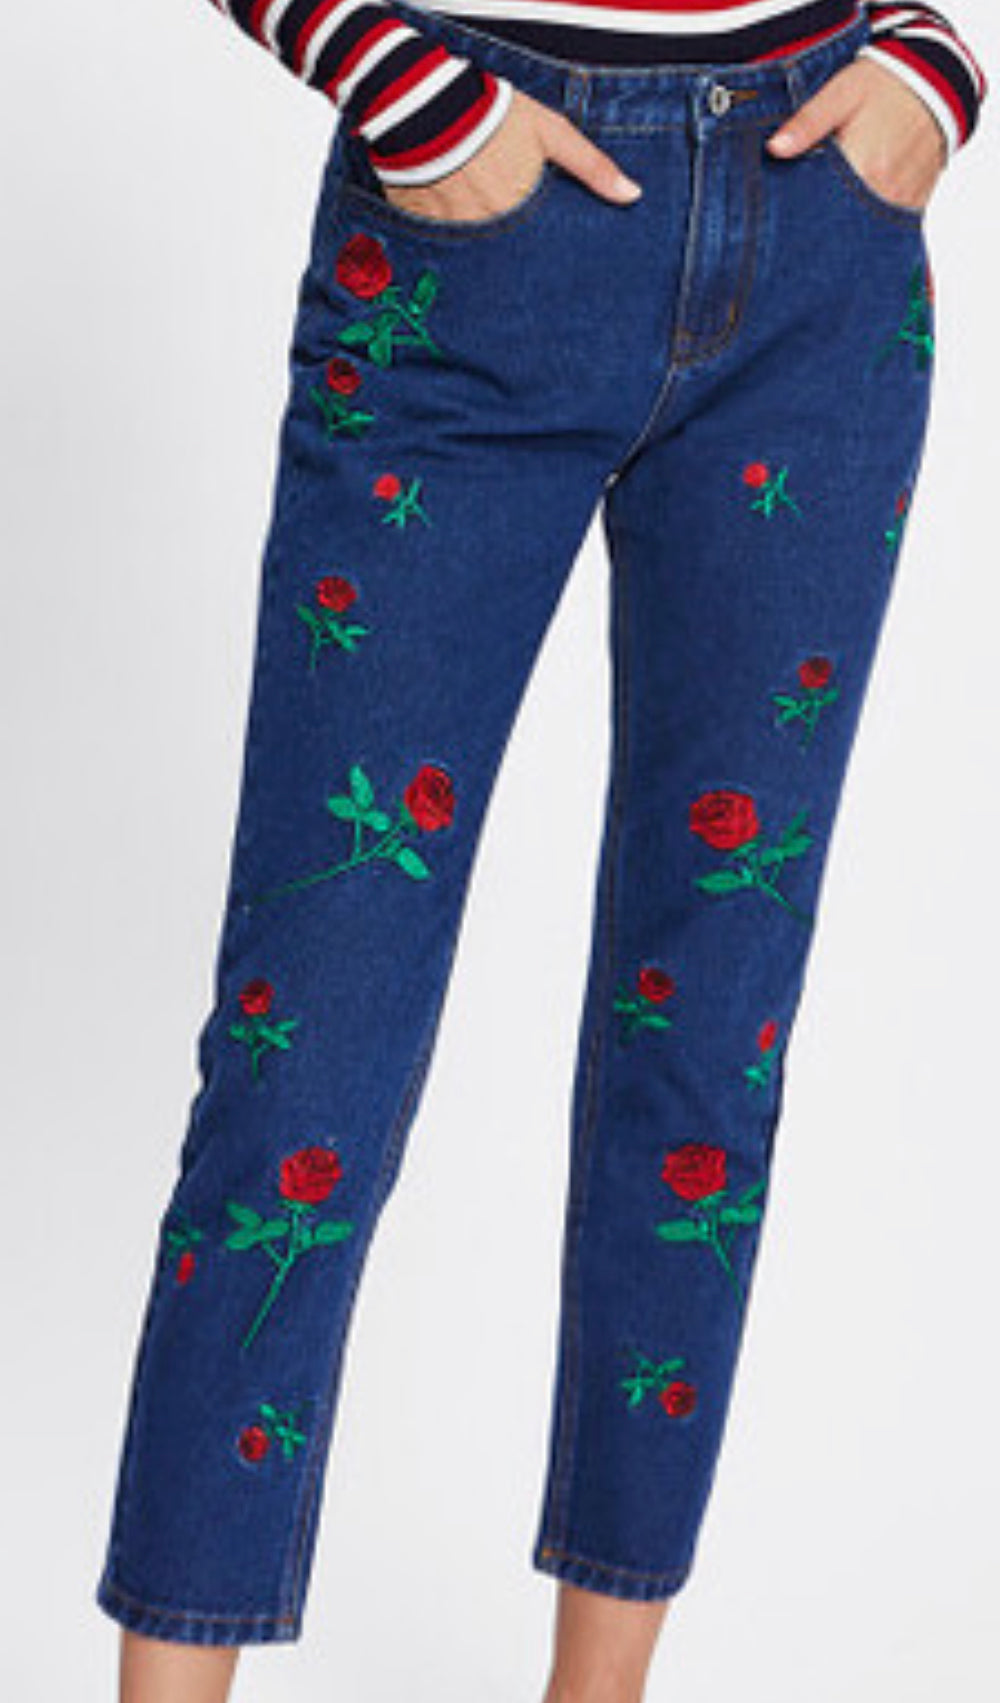 Rosé Embroidered Denim Jeans Fashion Pants